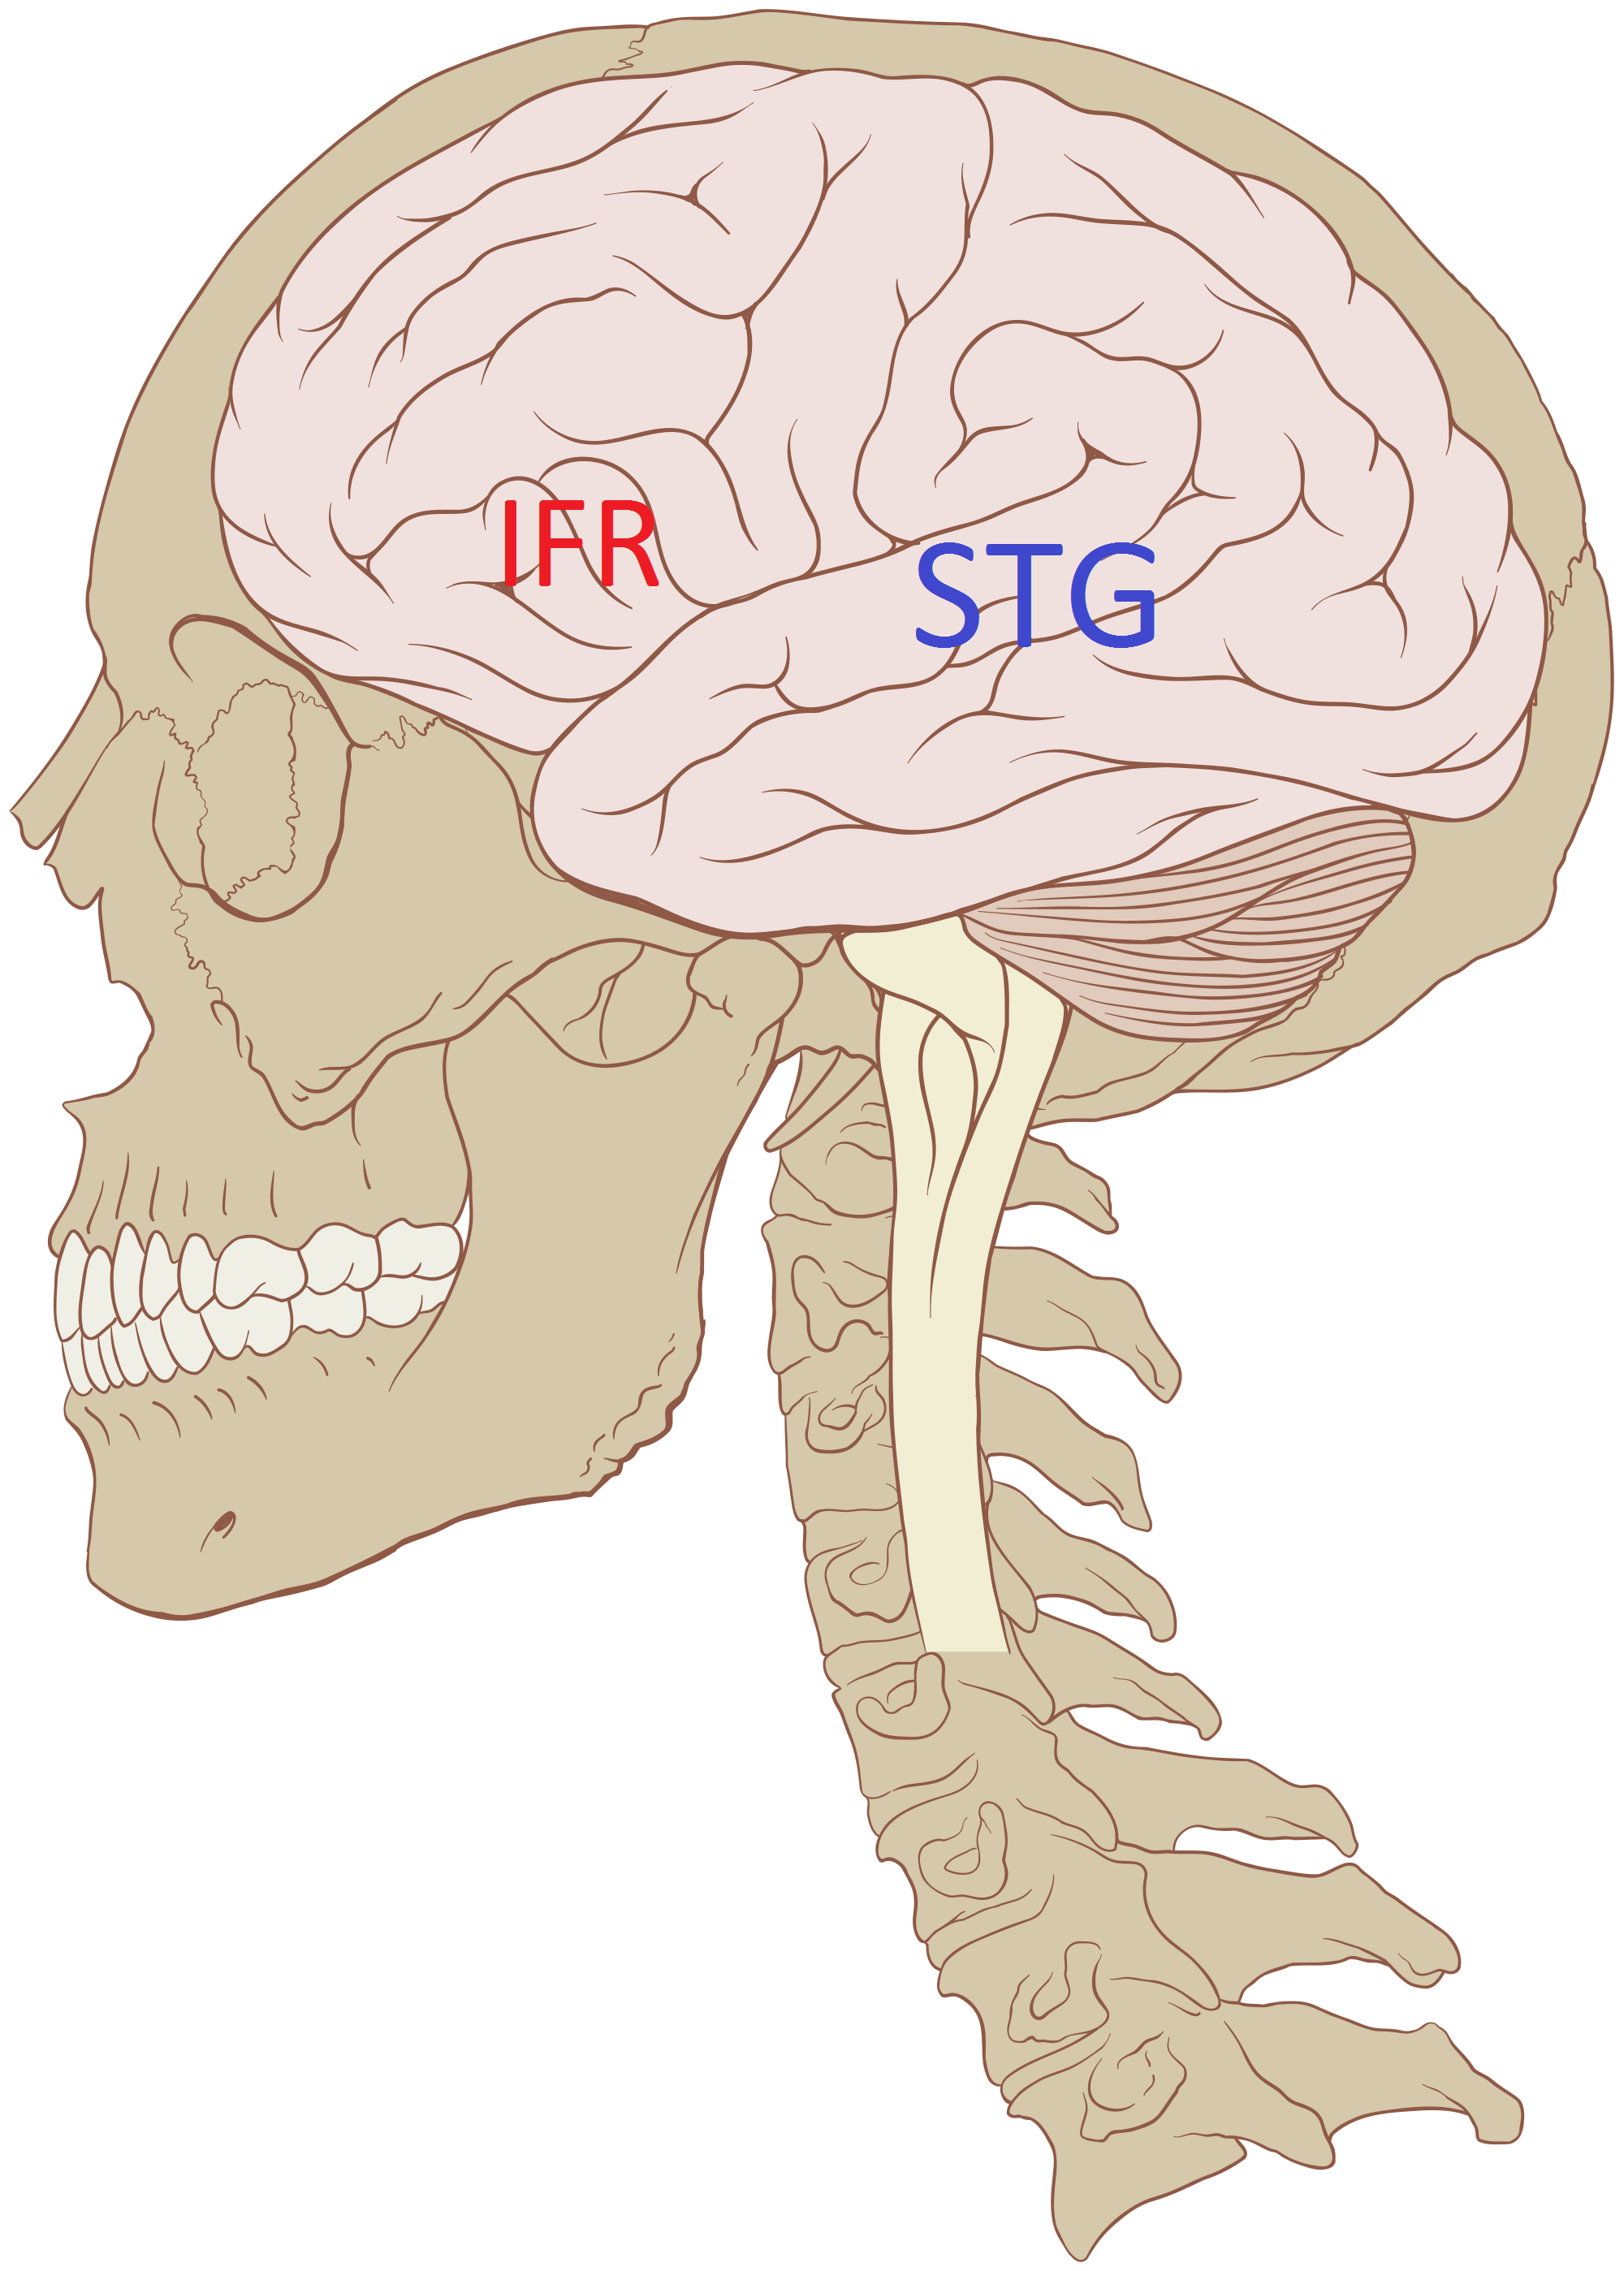 IFR=inferior frontális gyrus(Broca area, STG=superiro temporális gyrus(Wernicke area)